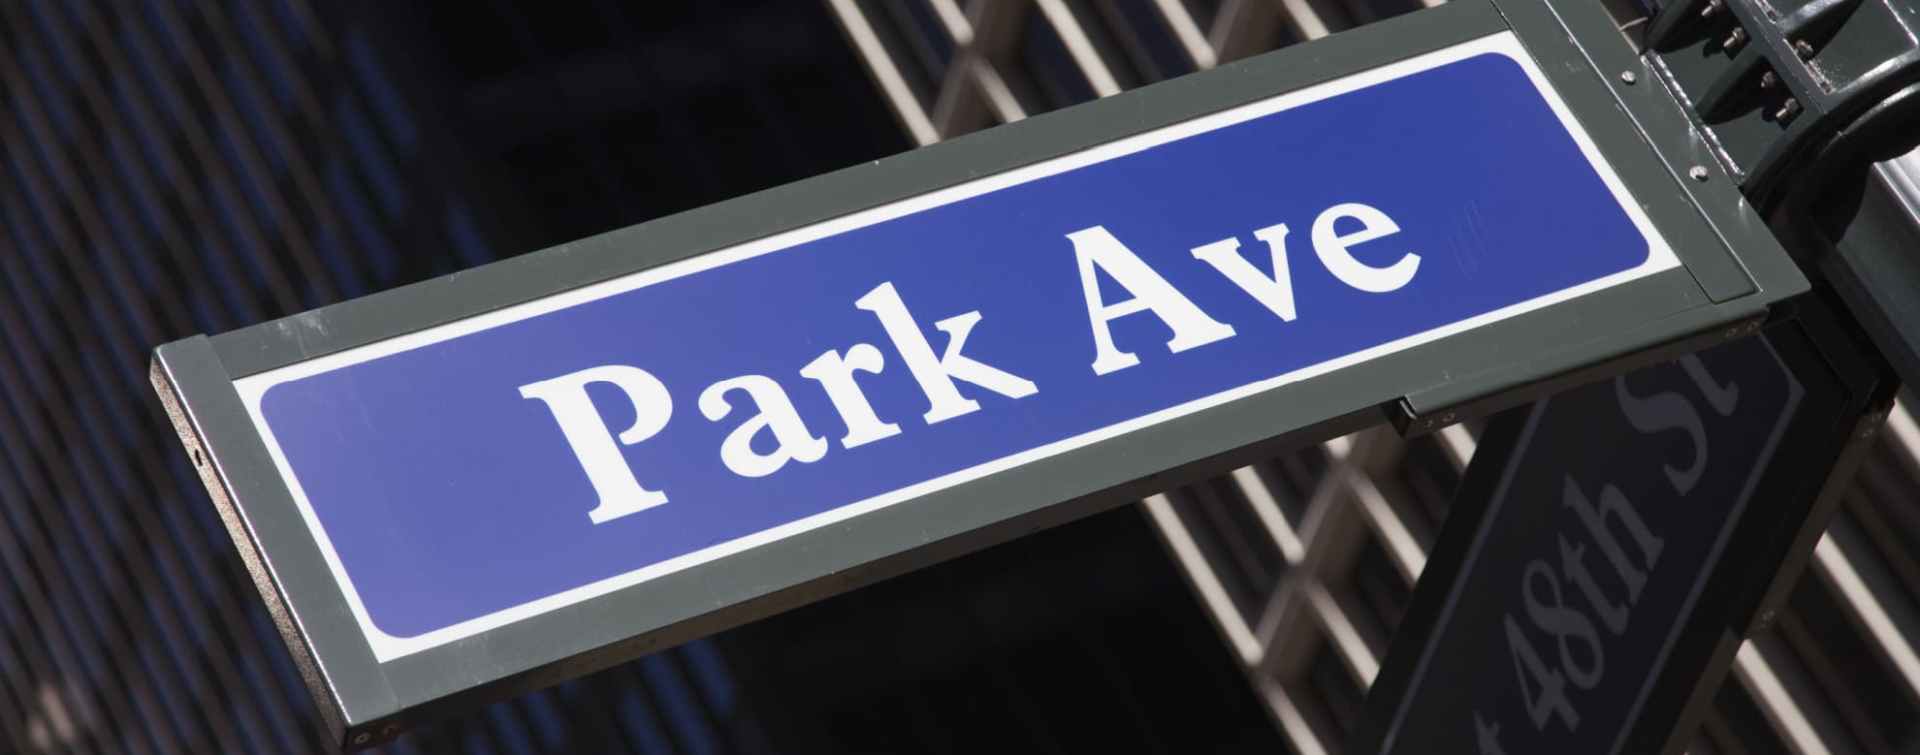 new york city street sign